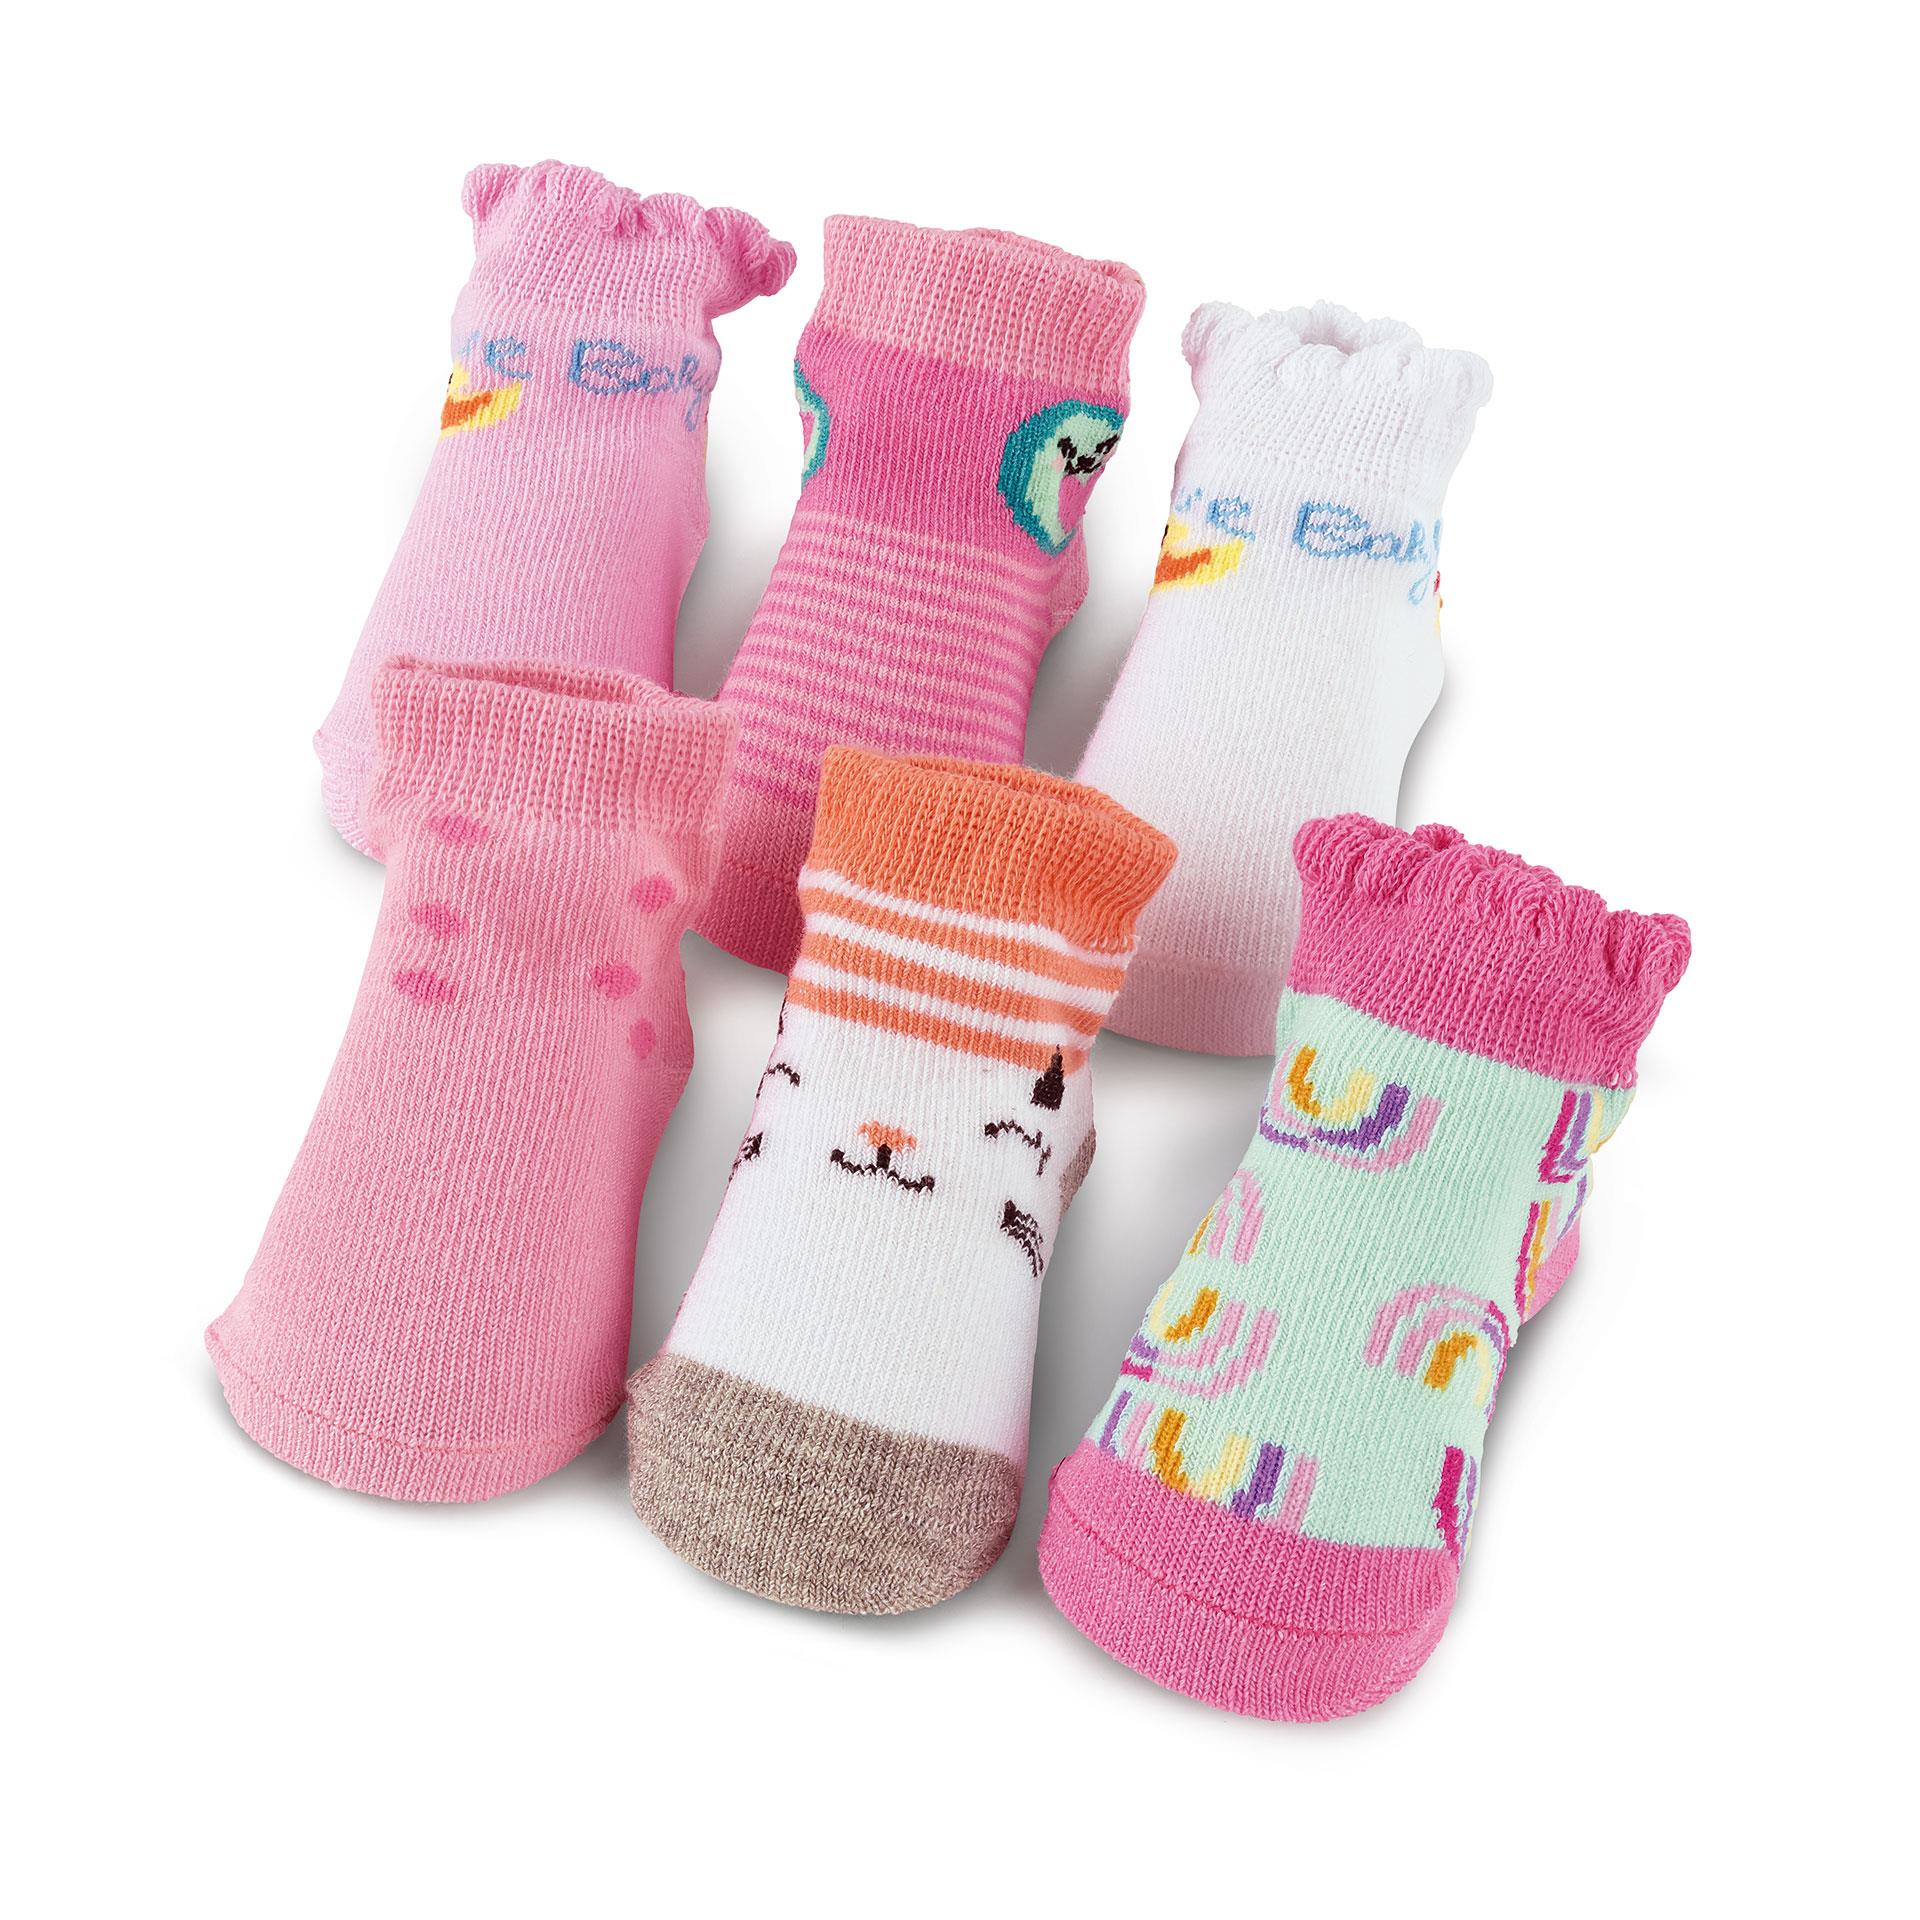 Puppen Socken Super Set – 6 Paar